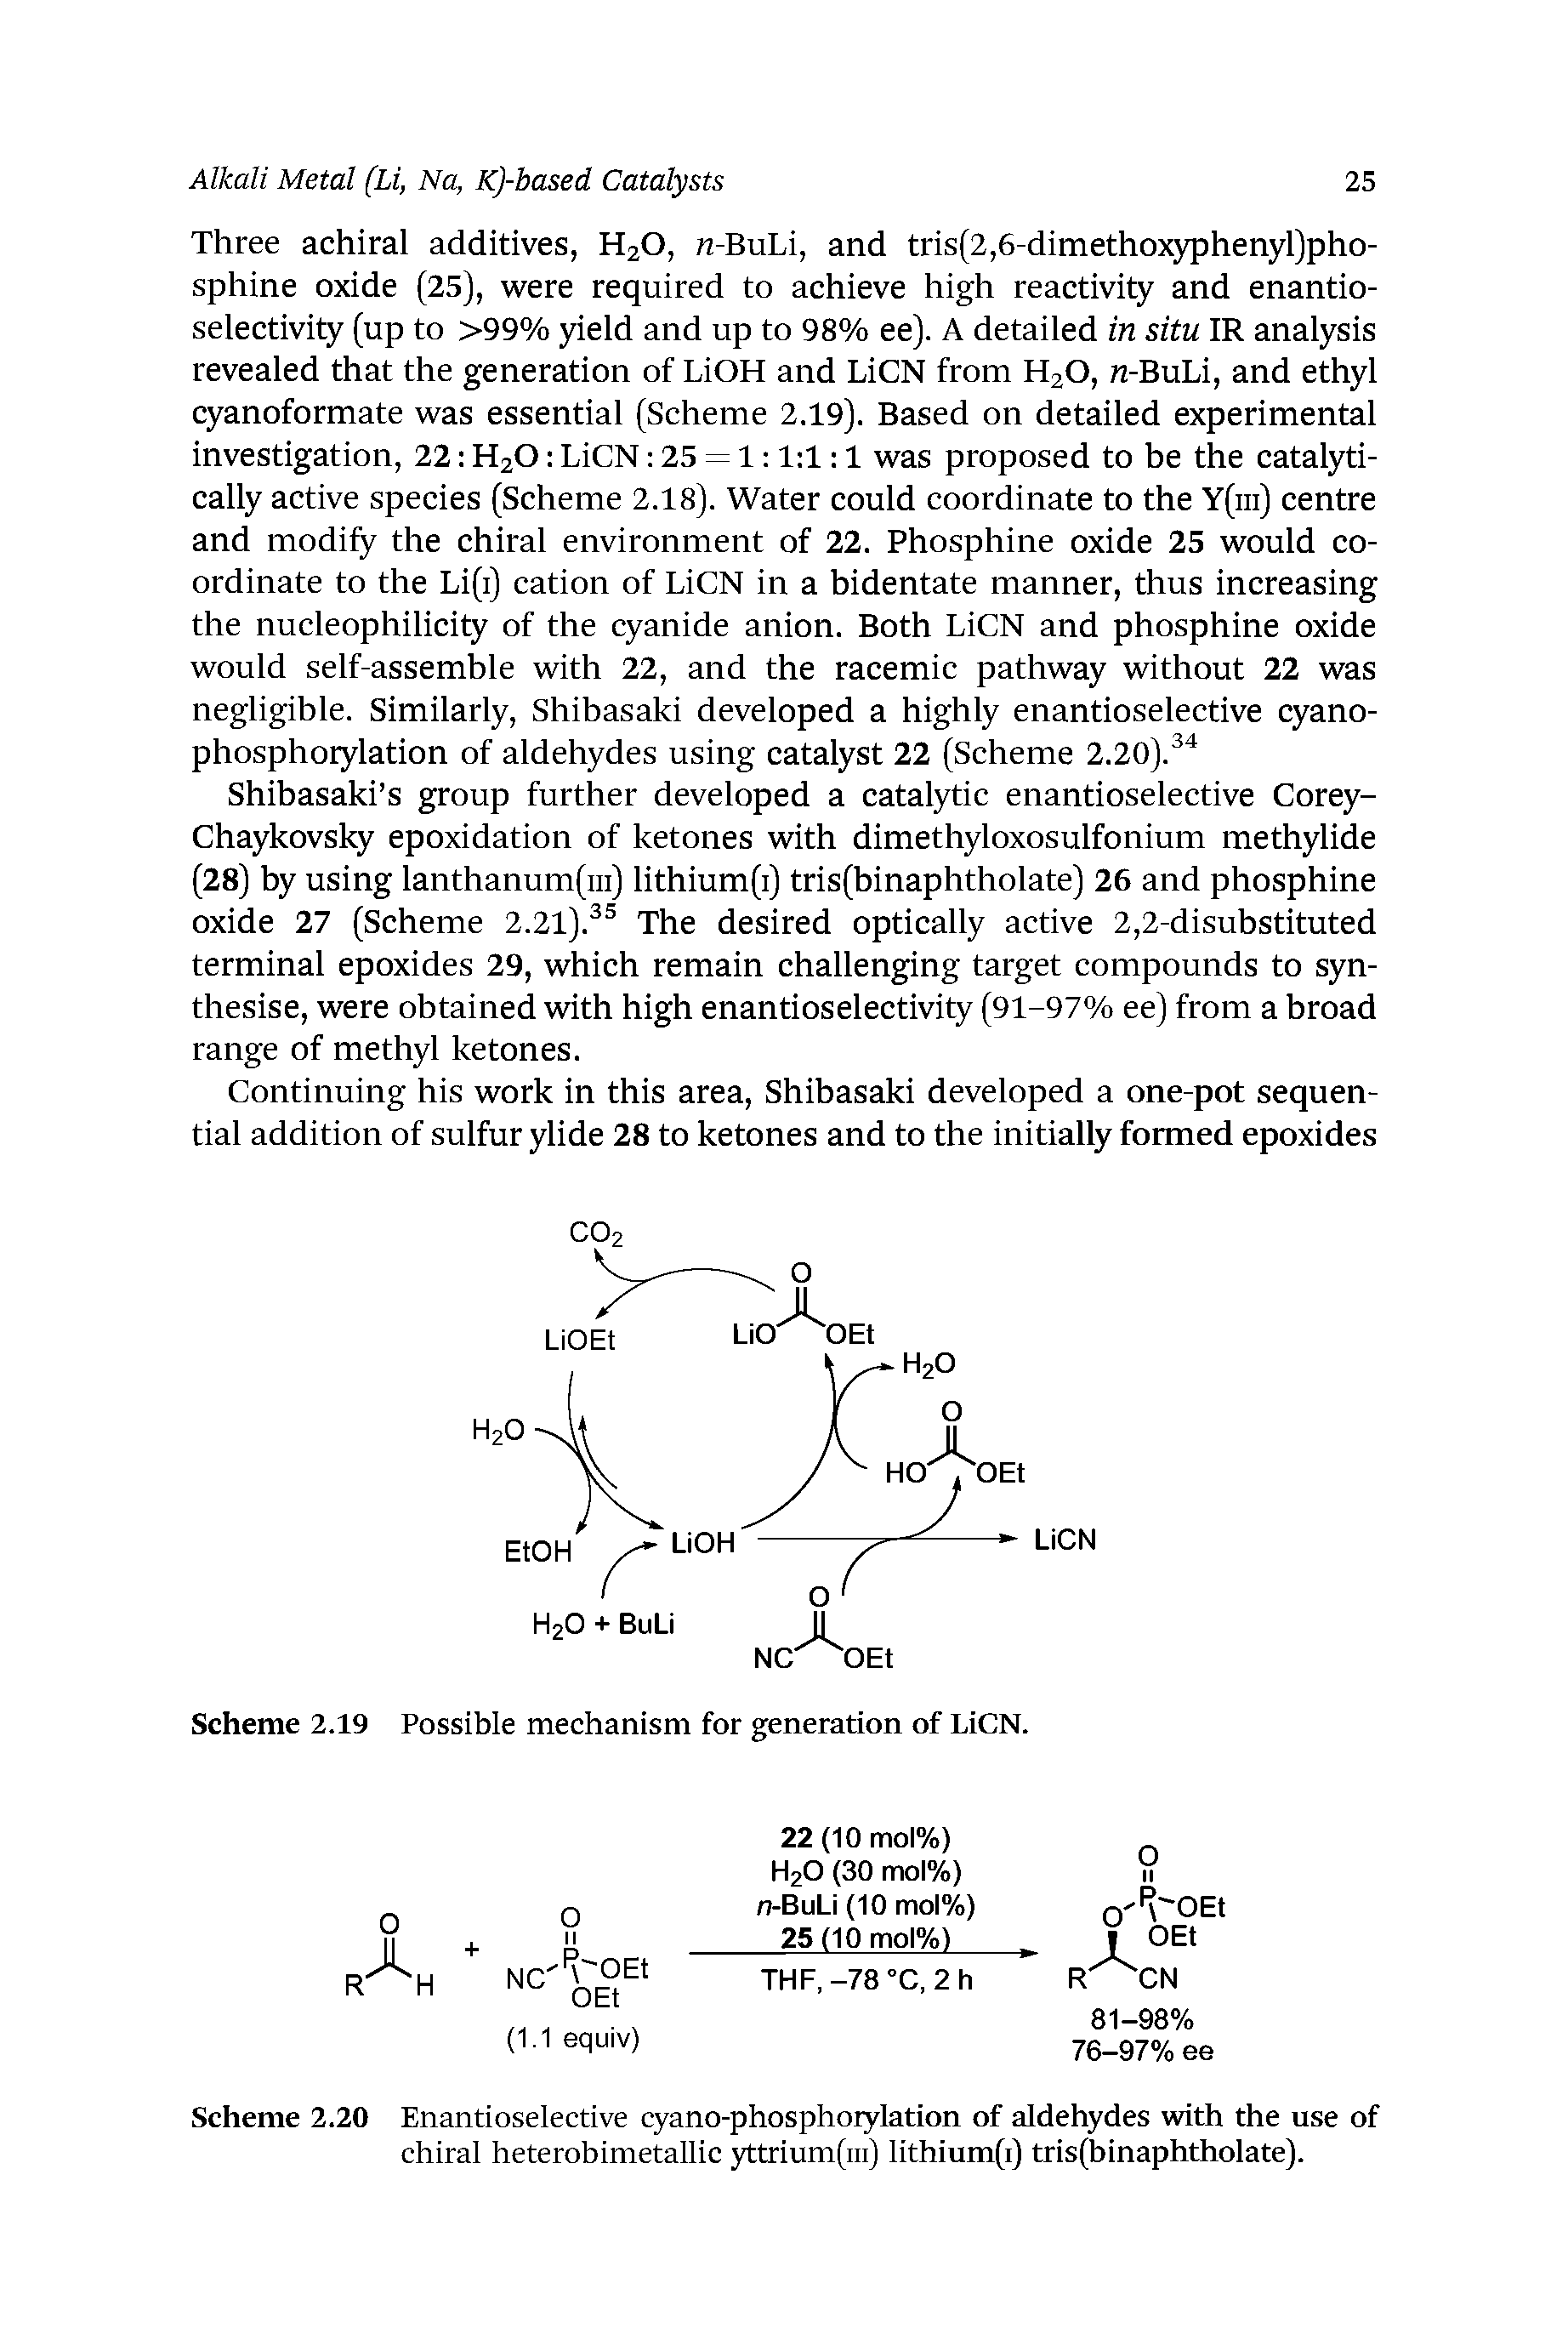 Scheme 2.20 Enantioselective cyano-phosphoiylation of aldehydes with the use of chiral heterobimetallic yttrium(iii) lithium(i) tris(binaphtholate).